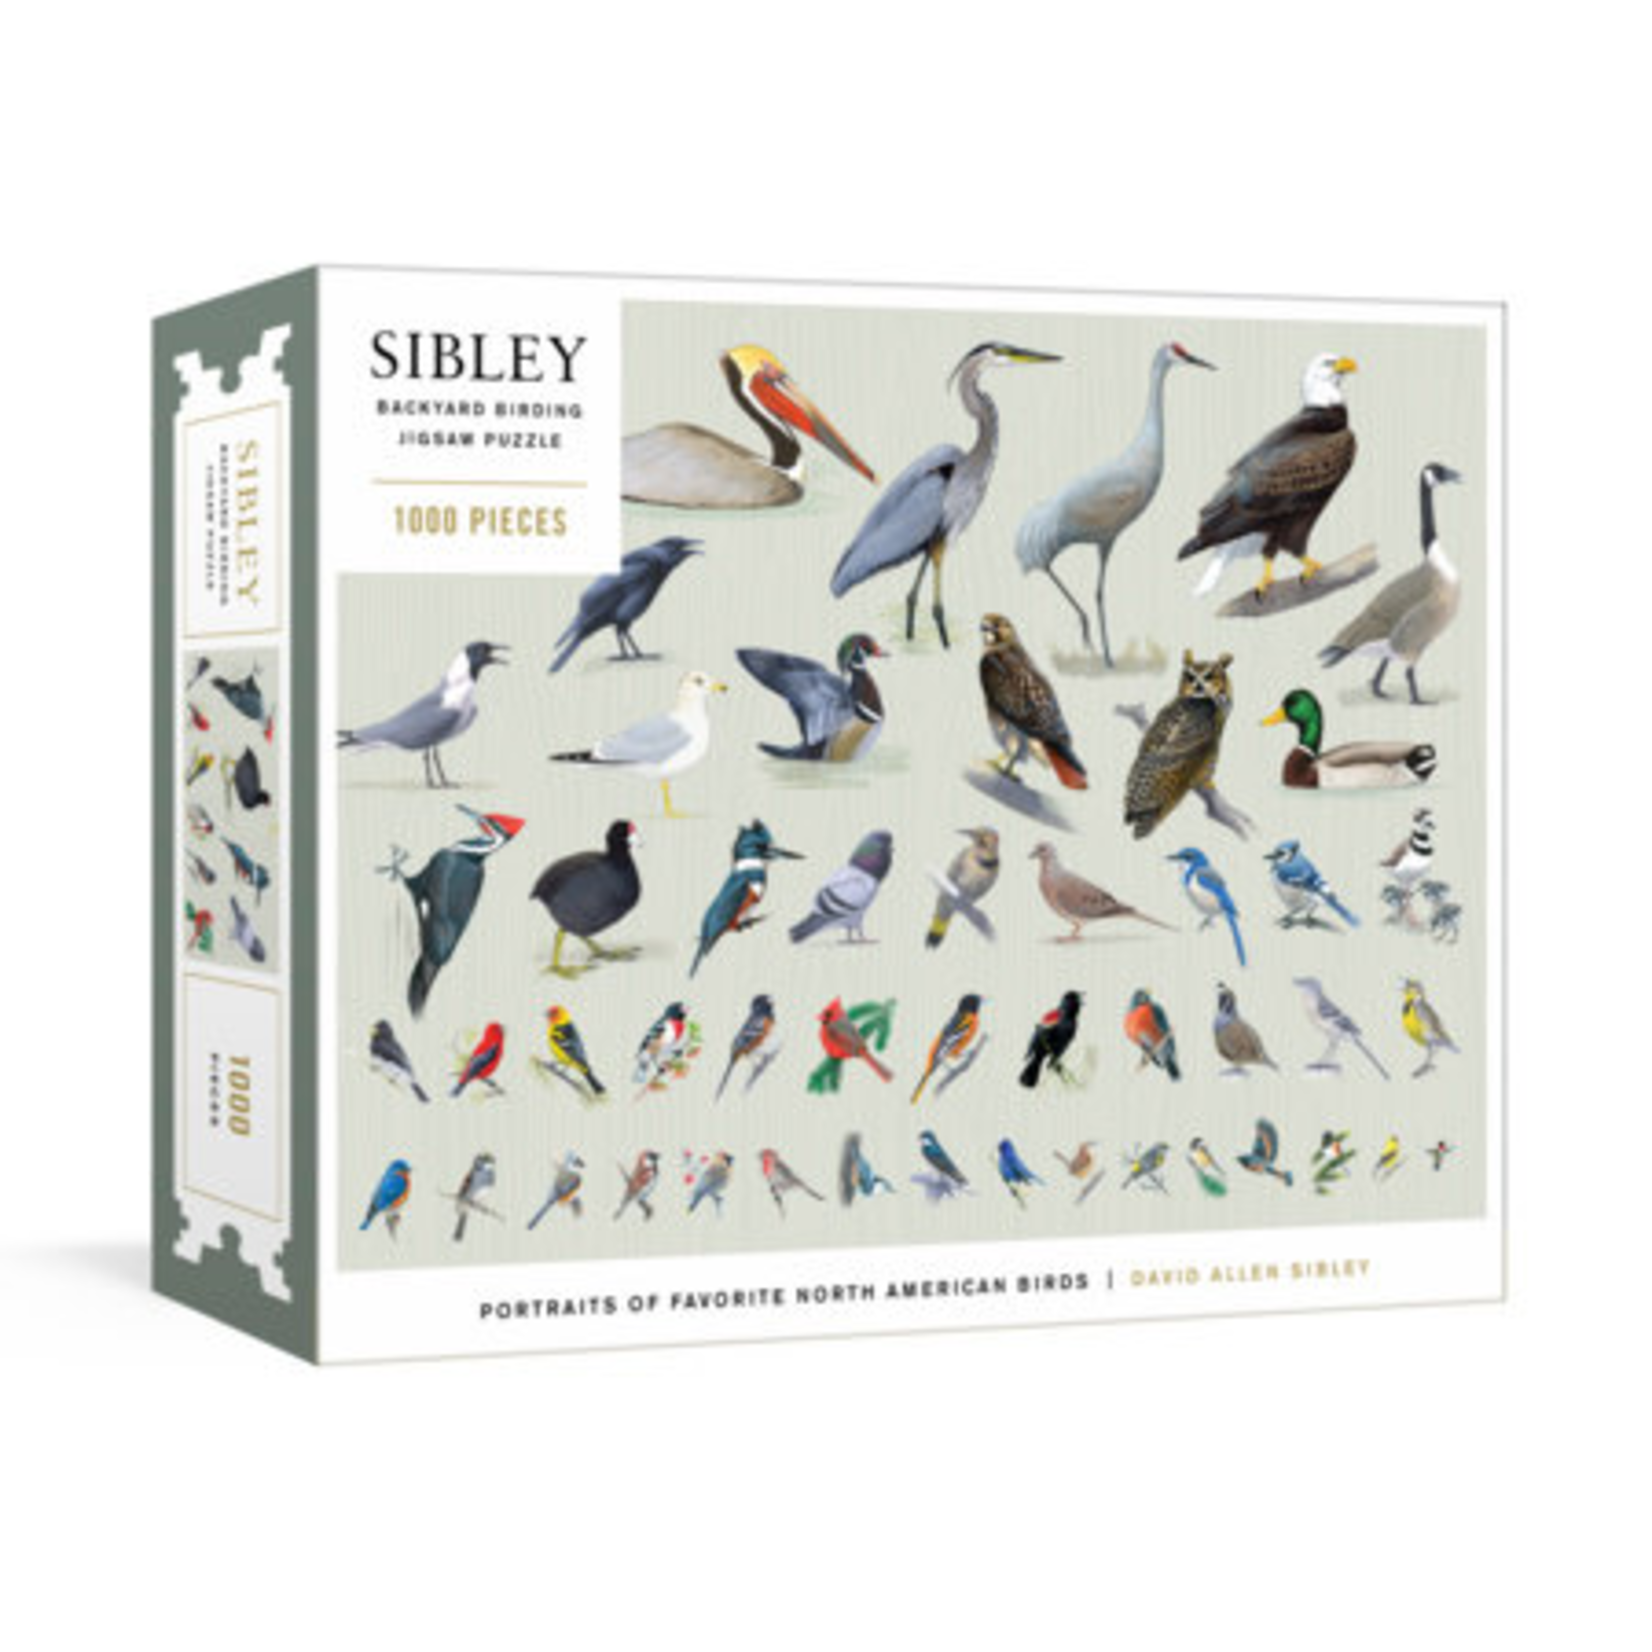 David Allen Sibley Sibley Backyard Birding, 1000-Piece Jigsaw Puzzle